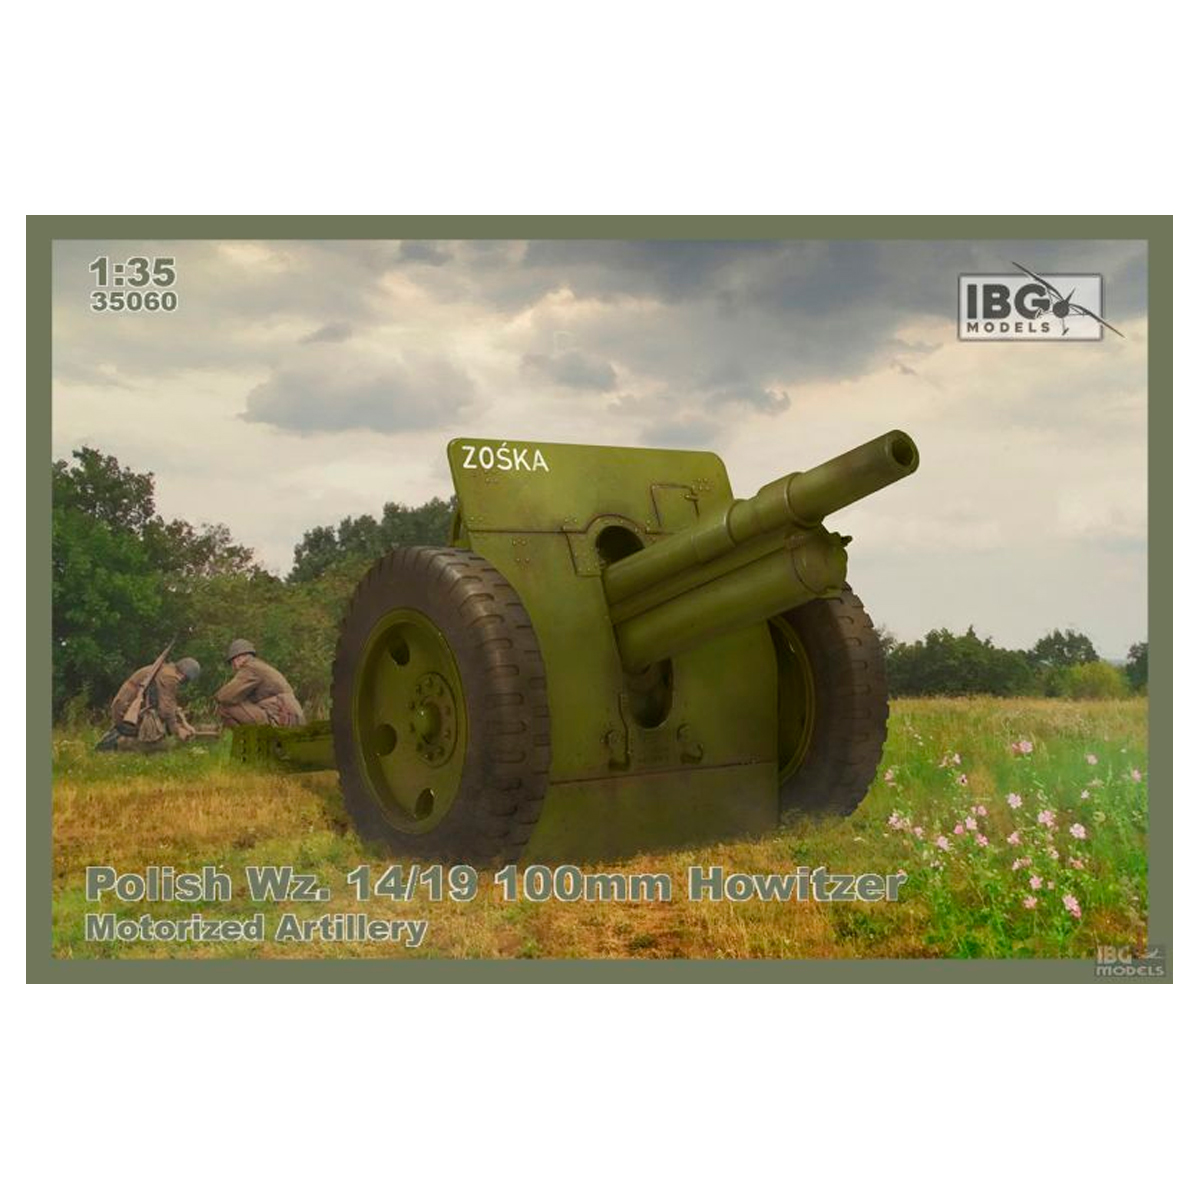 Polish Wz. 14/19 100mm Howitzer – Motorized Artillery 1/35